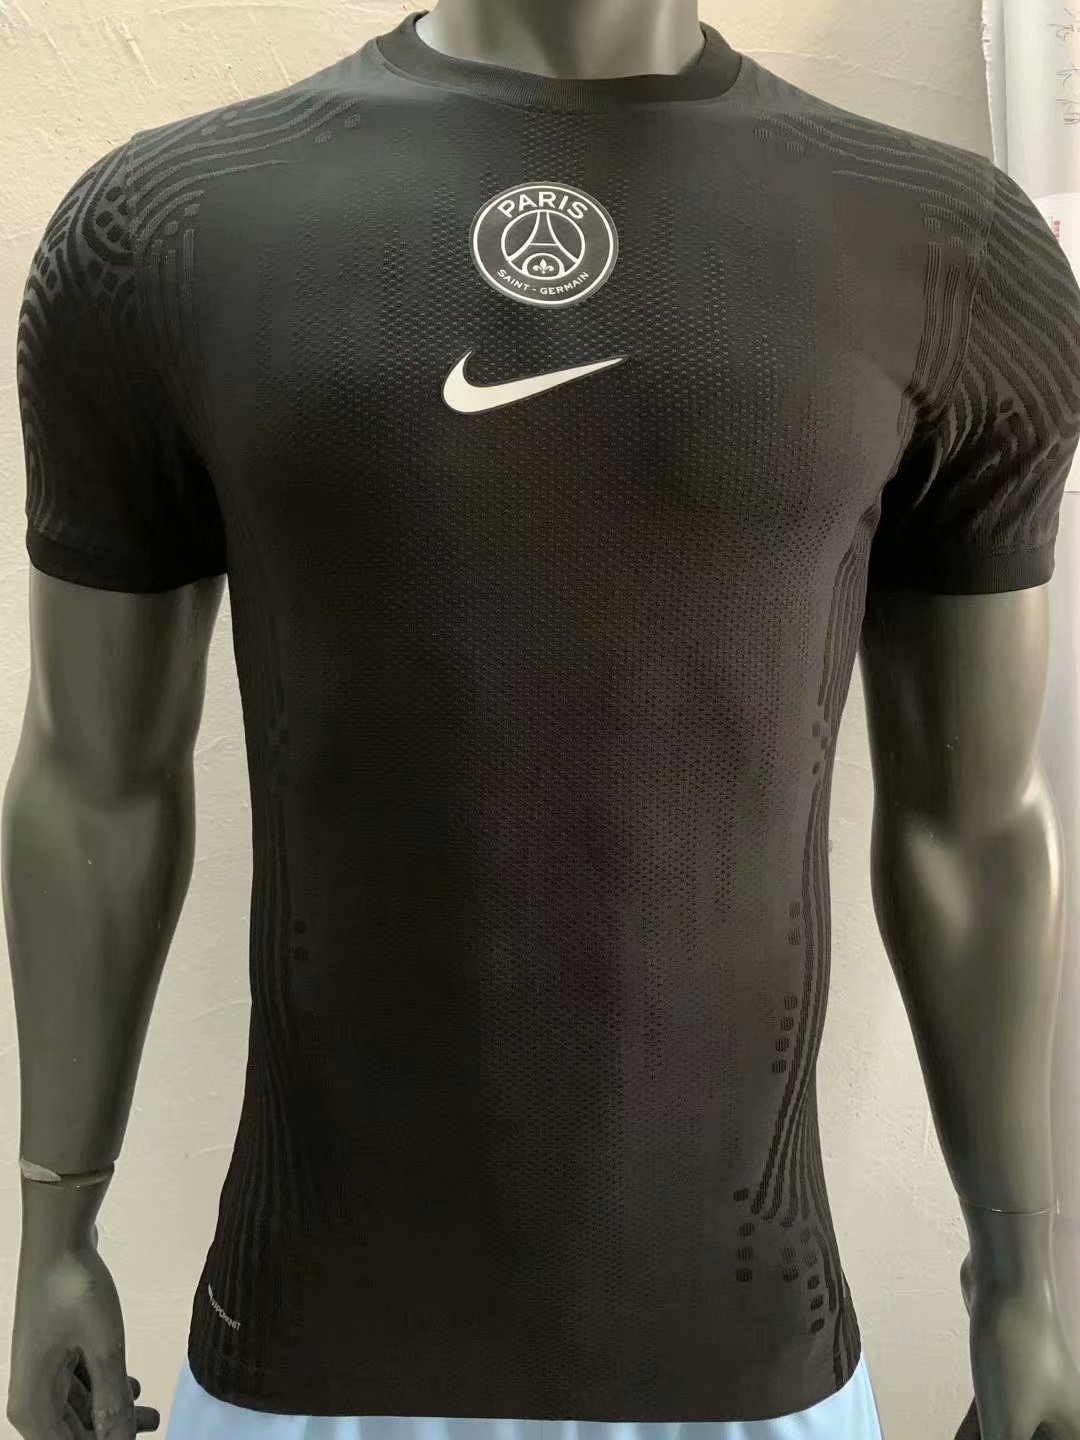 20/21 Adult top players version Paris black soccer jersey football shirt